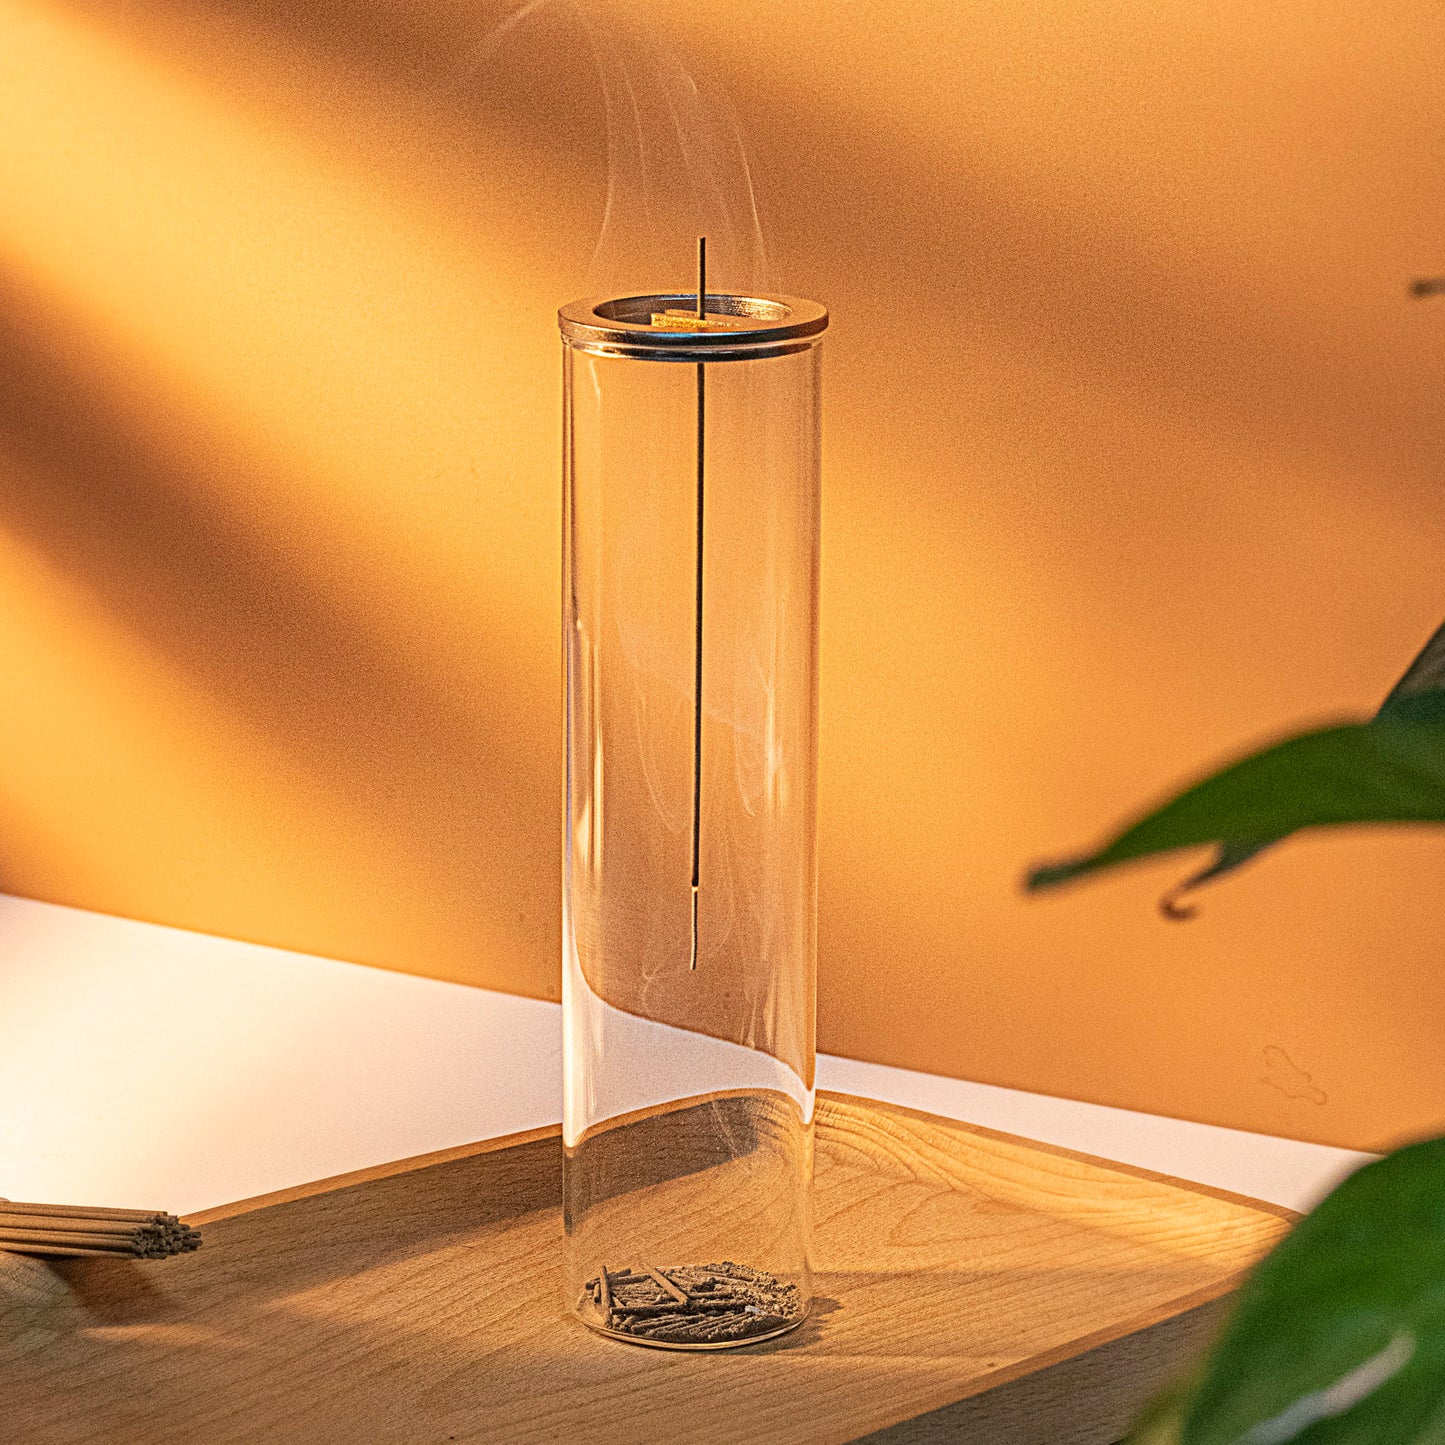 Incense Holder for Sticks [Anti-Ash Flying] with Removable Glass Ash Catcher Mess-Free Incense Burner for Meditation Yoga Spa Room Decor